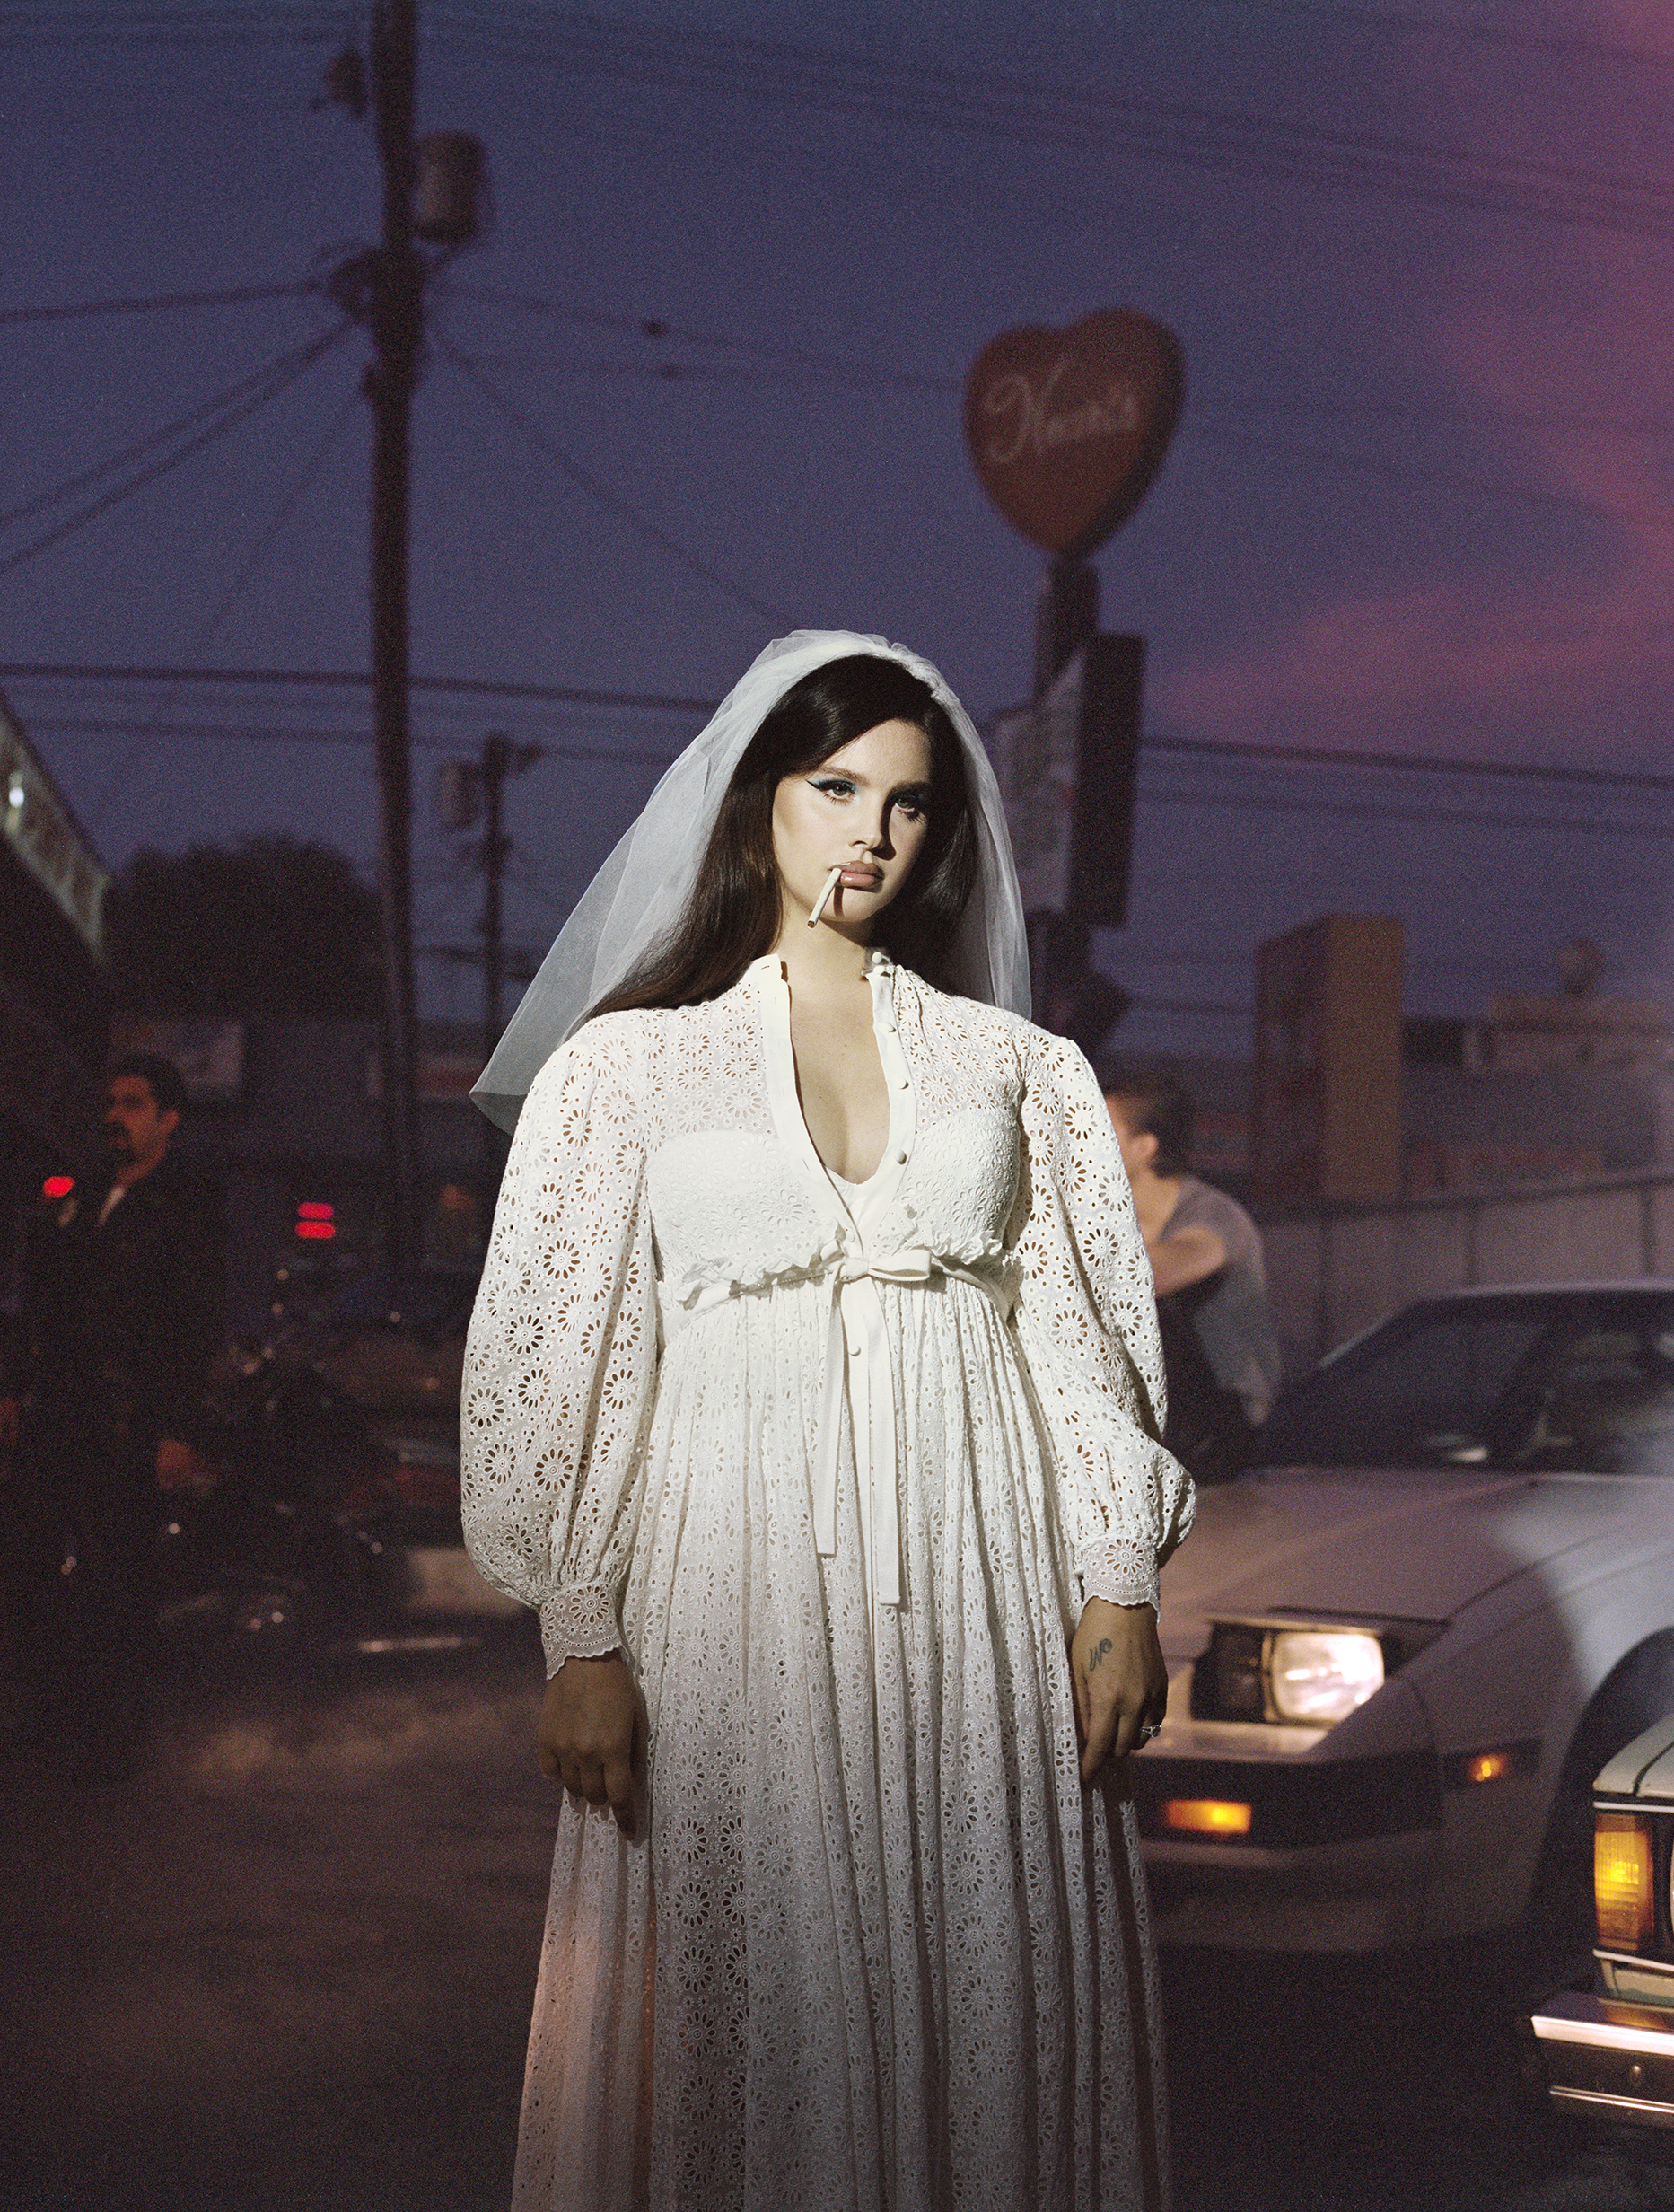 New Lana Del Rey album leaves little to remember